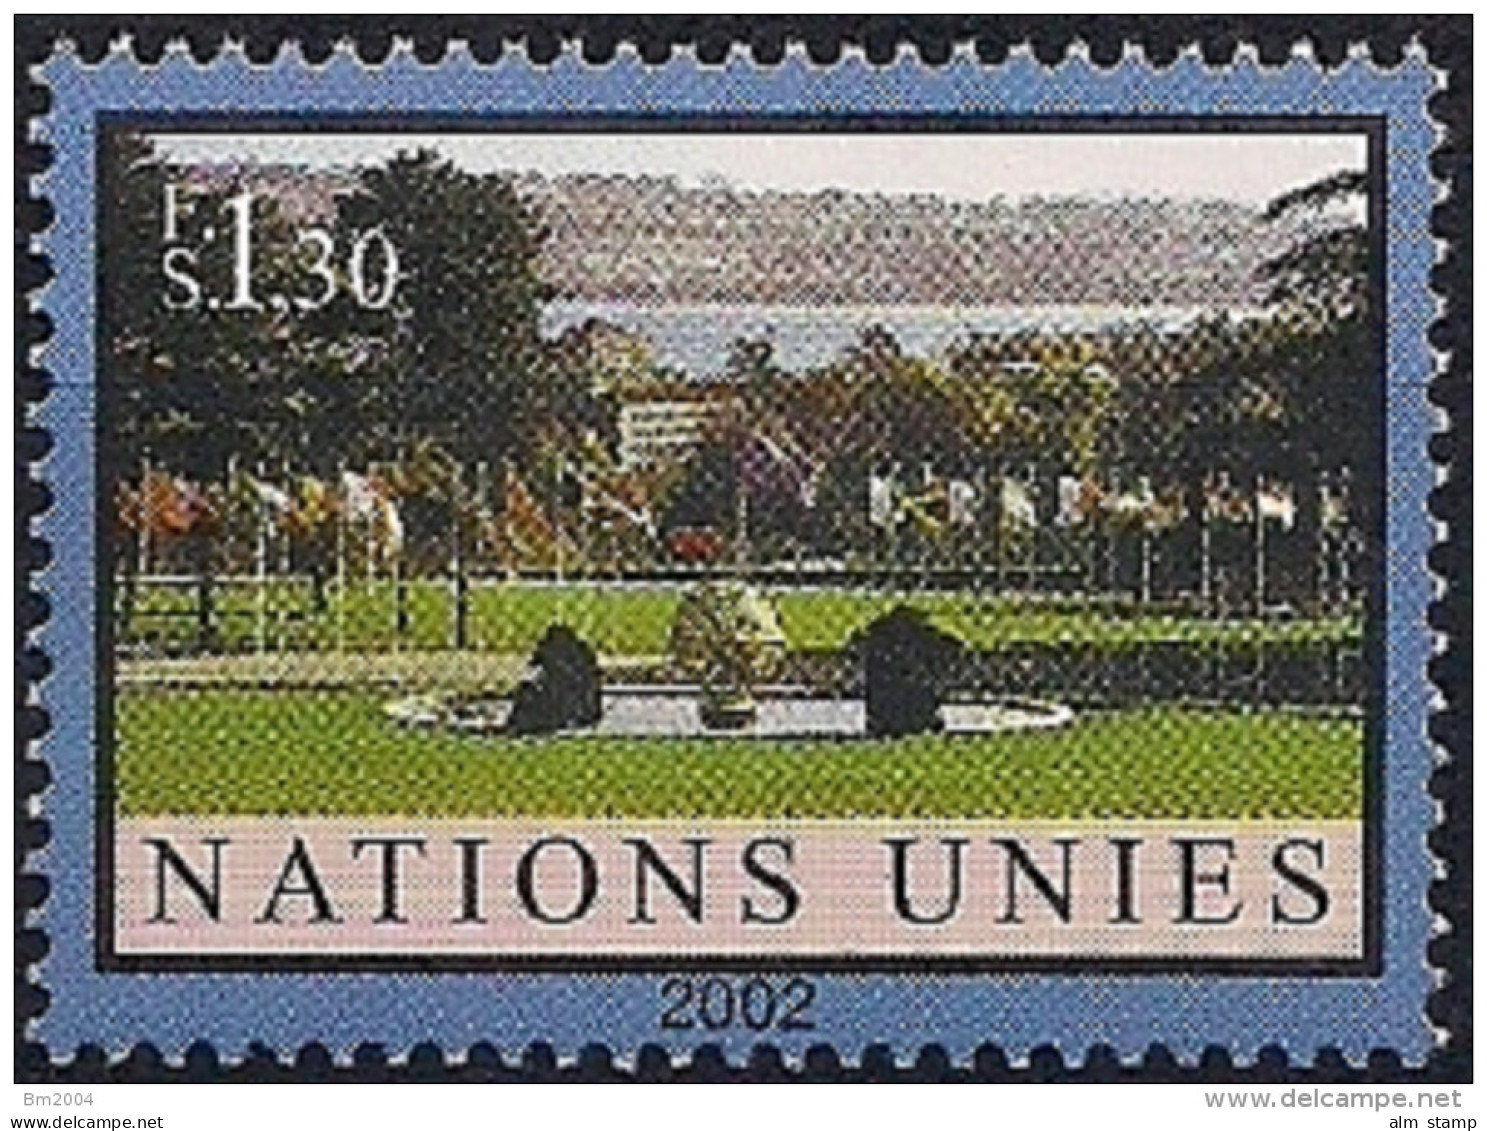 2002 UNO  Genf   Mi.  433**MNH  Himmelsglobus Im Ariana-Park, Genf - Nuevos